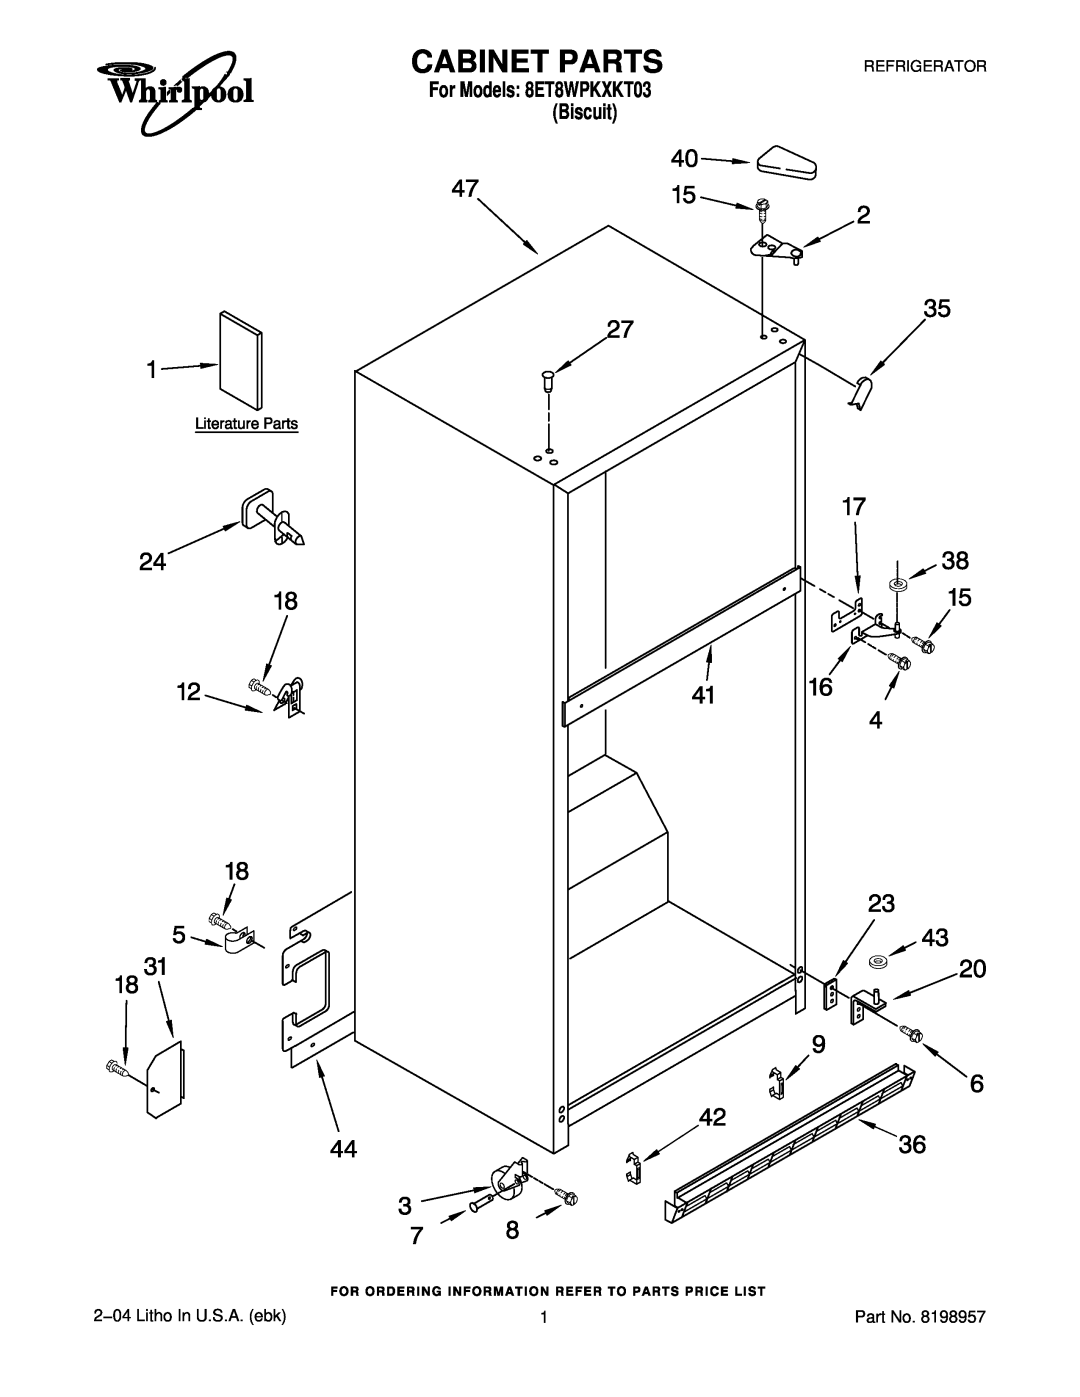 Whirlpool manual Cabinet Parts, 2−04 Litho In U.S.A. ebk, For Models 8ET8WPKXKT03 Biscuit, Refrigerator, Part No 